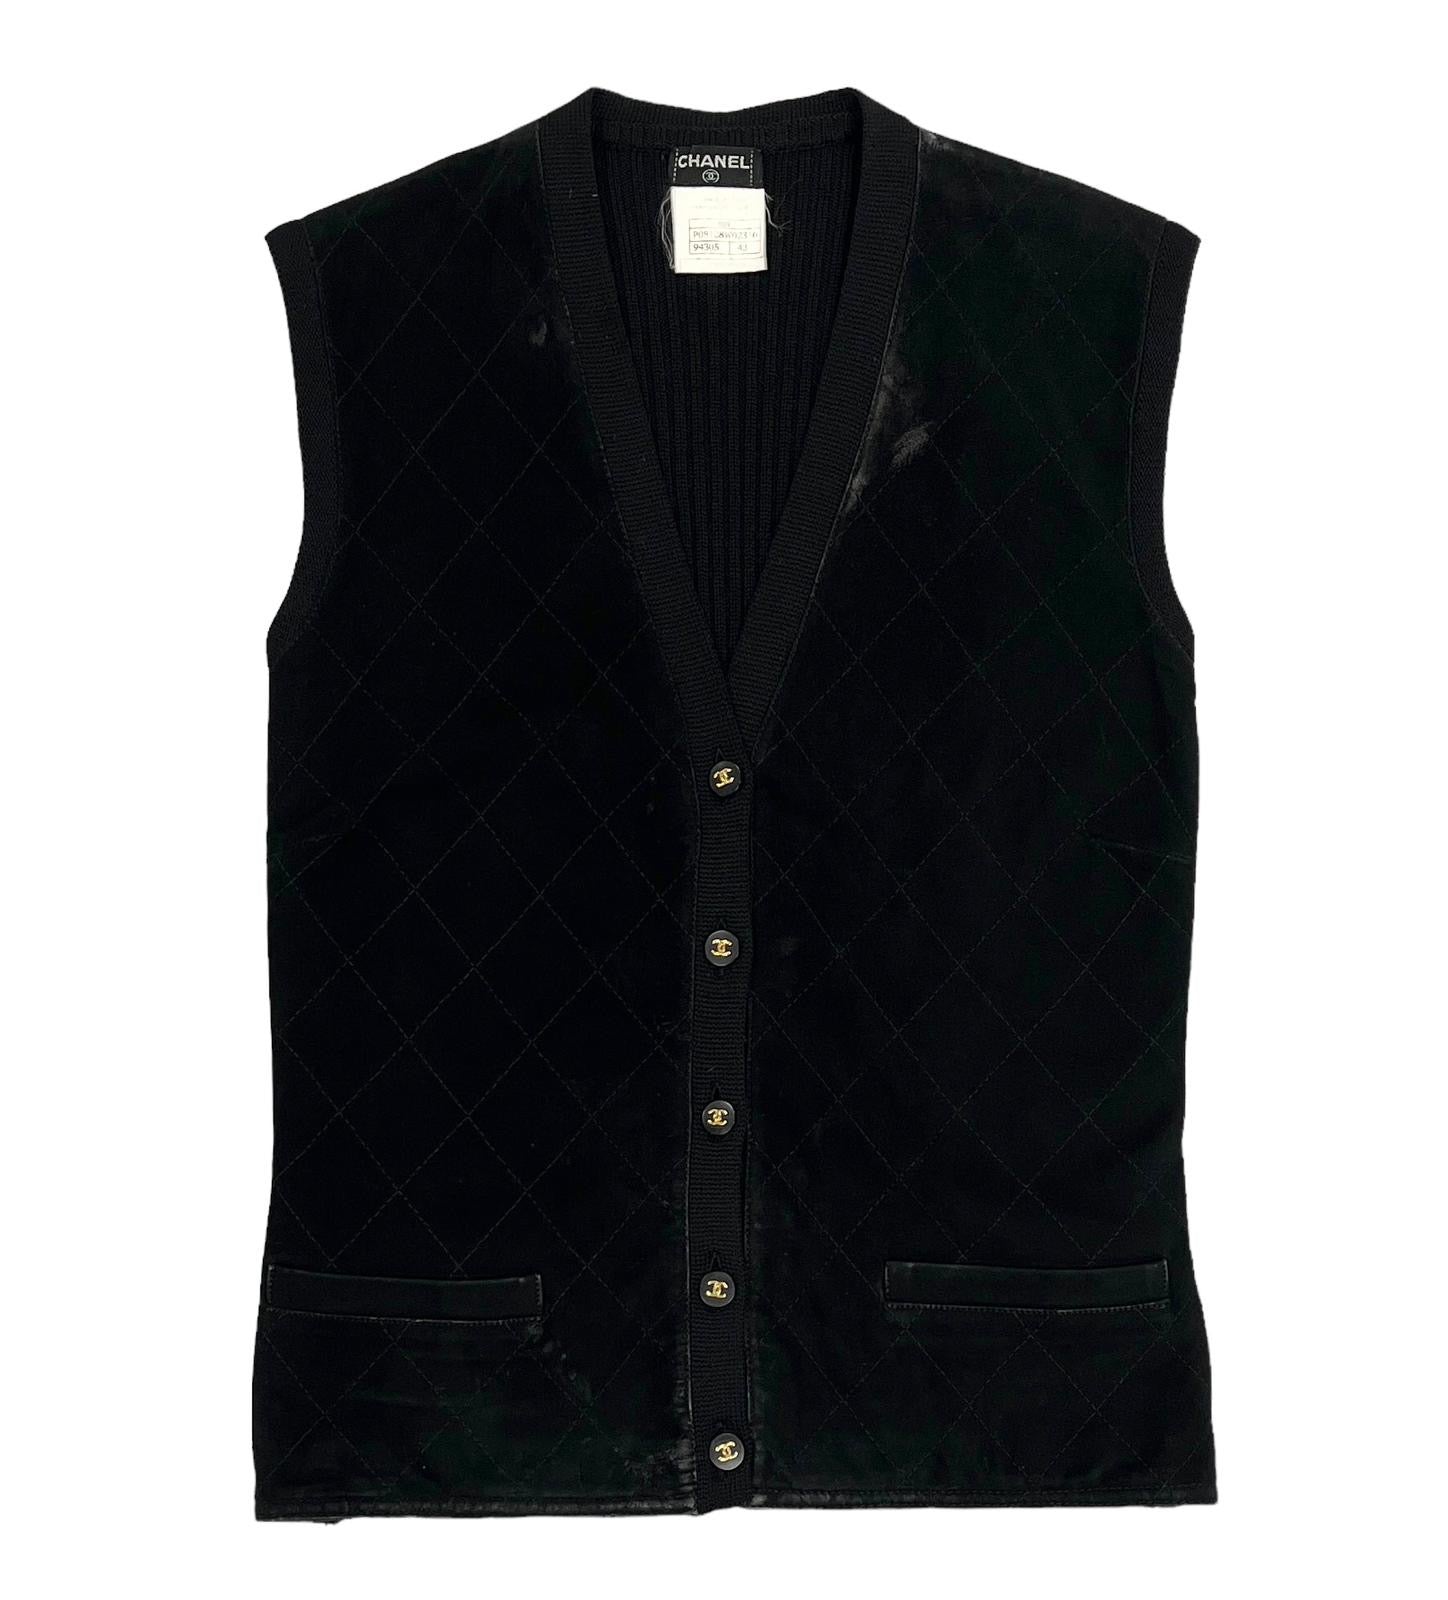 Chanel Black Suede Quilt Vest